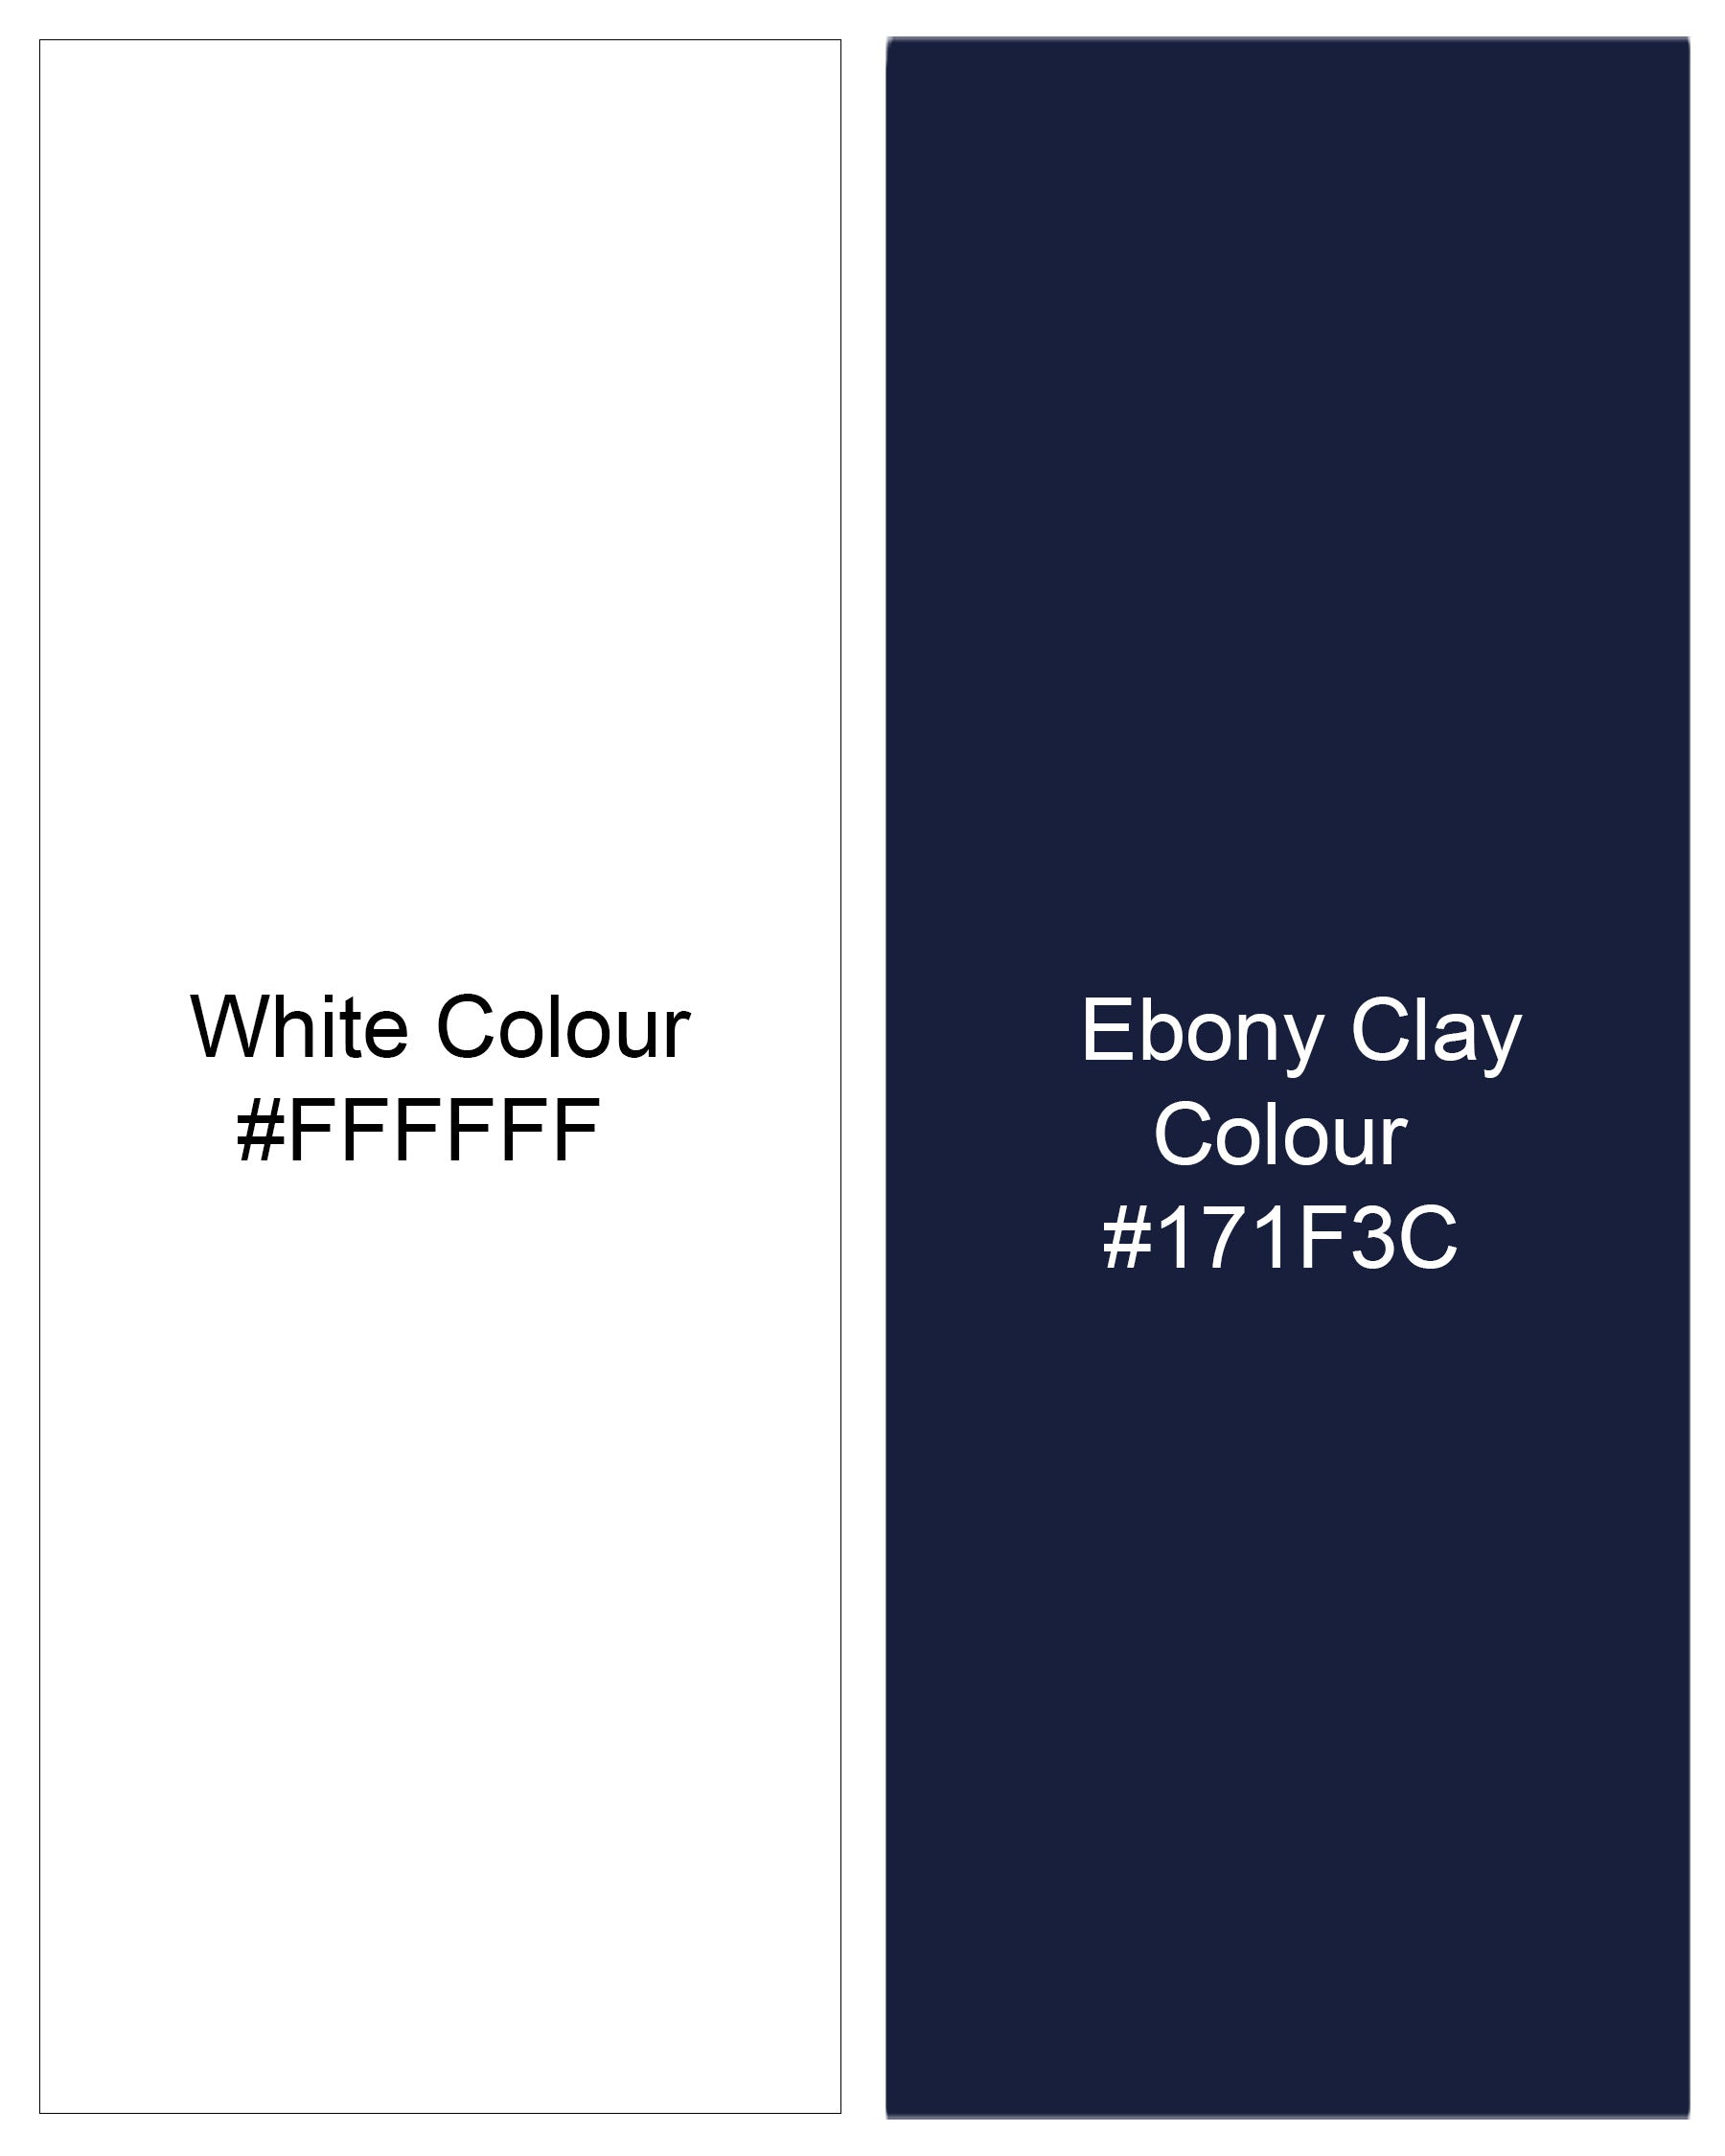 Bright White and Ebony Clay Blue Gingham Premium Cotton Shirt 8163-BD-BLE-38, 8163-BD-BLE-H-38, 8163-BD-BLE-39, 8163-BD-BLE-H-39, 8163-BD-BLE-40, 8163-BD-BLE-H-40, 8163-BD-BLE-42, 8163-BD-BLE-H-42, 8163-BD-BLE-44, 8163-BD-BLE-H-44, 8163-BD-BLE-46, 8163-BD-BLE-H-46, 8163-BD-BLE-48, 8163-BD-BLE-H-48, 8163-BD-BLE-50, 8163-BD-BLE-H-50, 8163-BD-BLE-52, 8163-BD-BLE-H-52